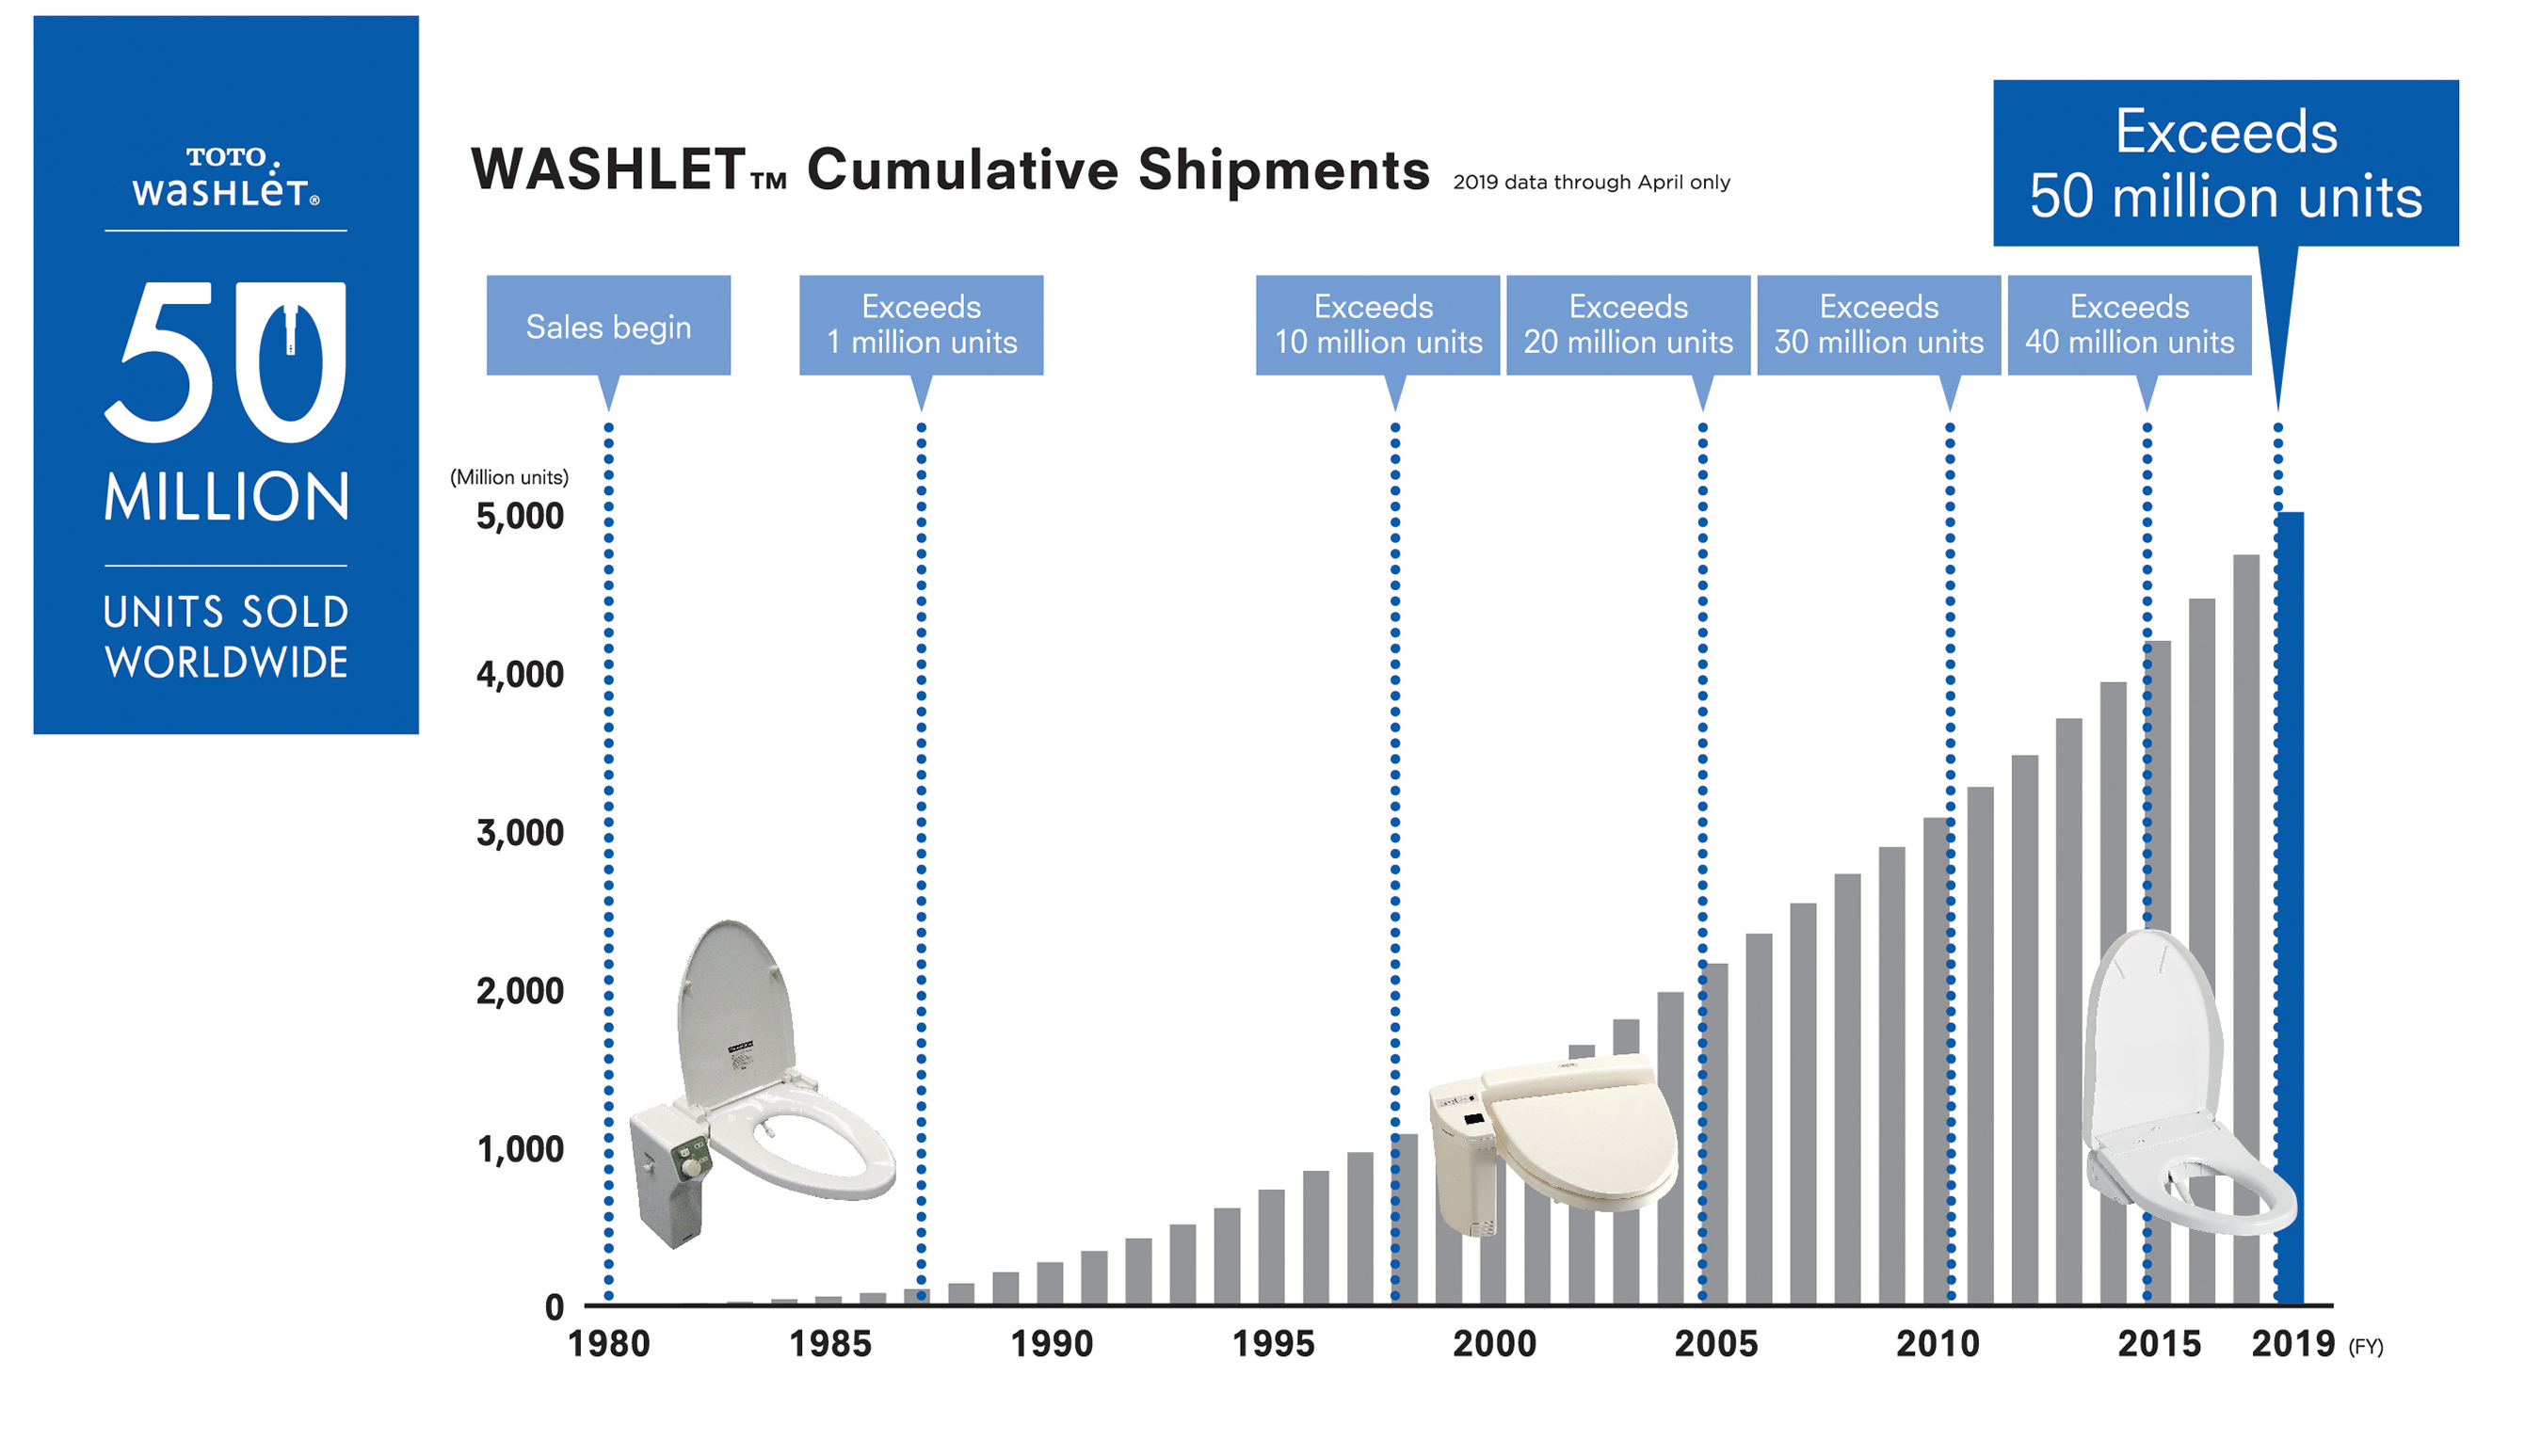 Global Sales of TOTO's Popular WASHLET® Line exceed 50 Million